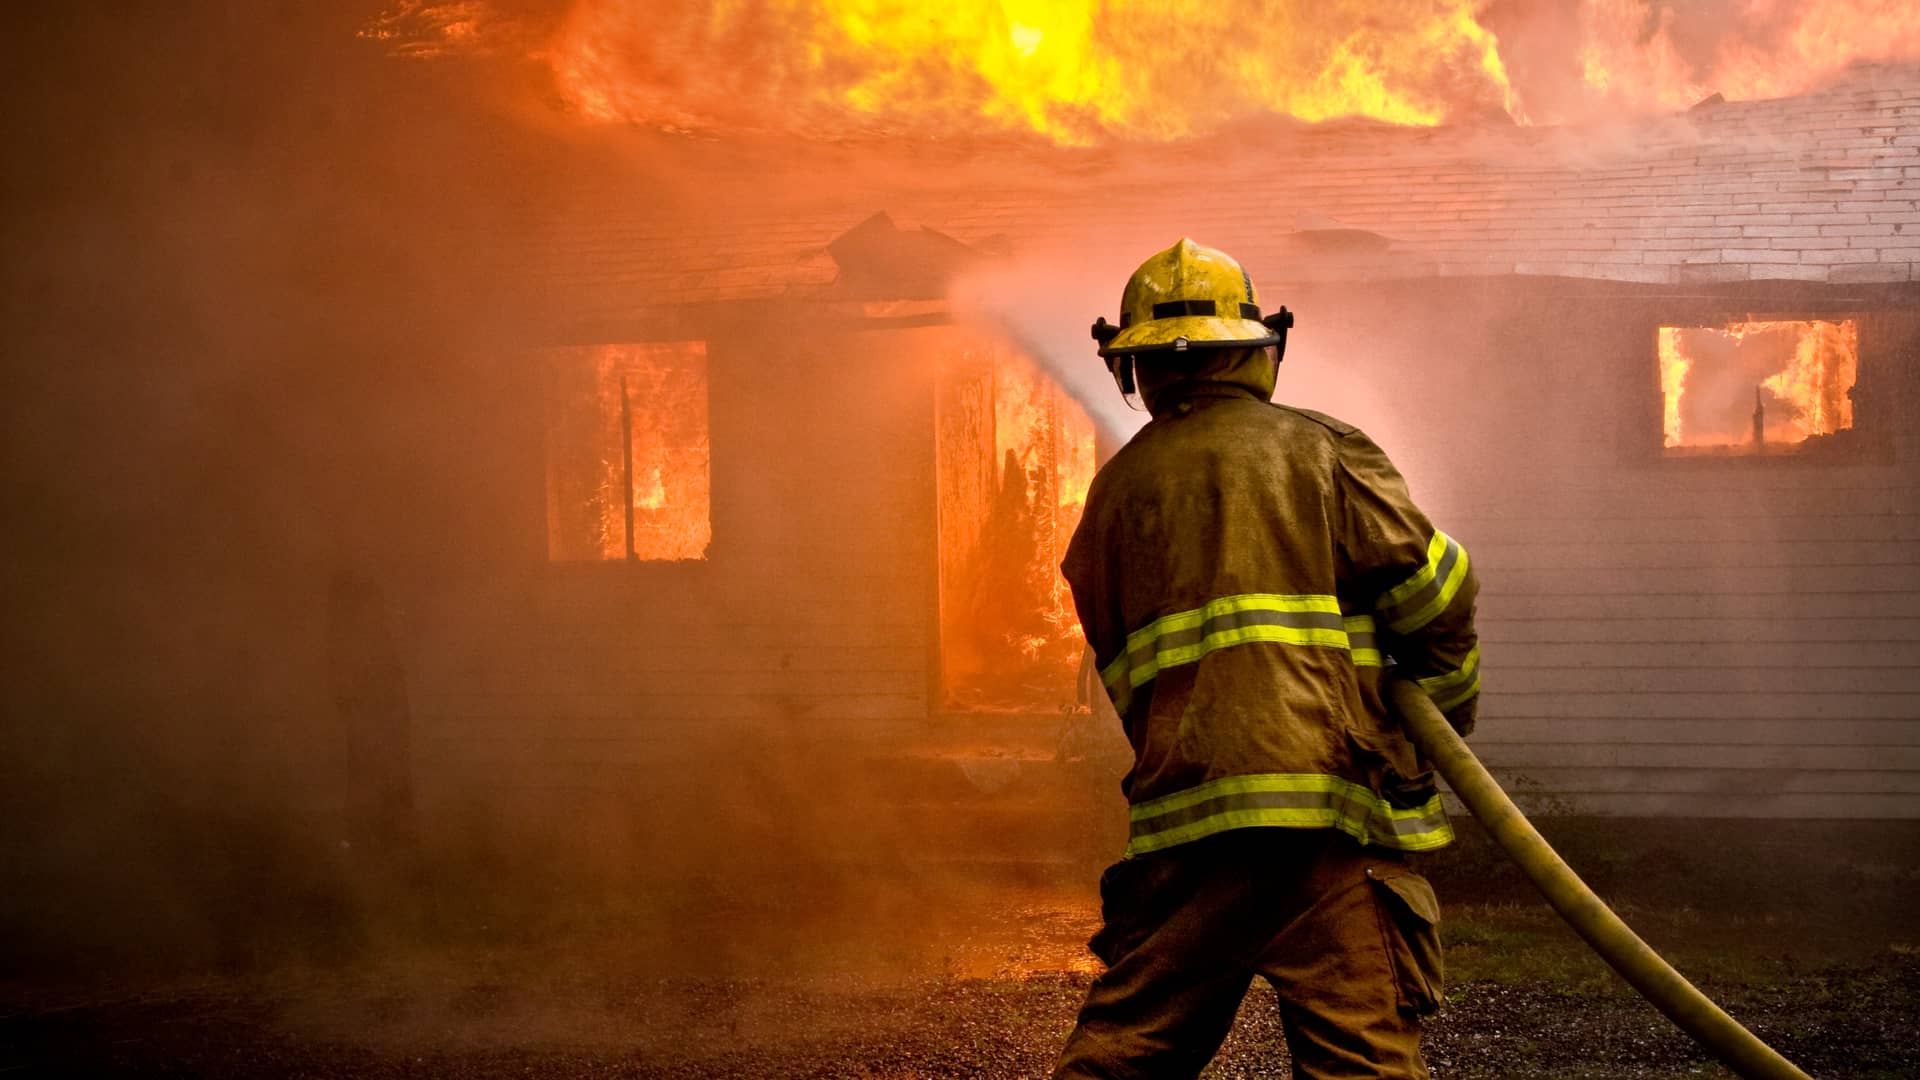 Bombero sofocando incendio en hogar con seguro de incendio